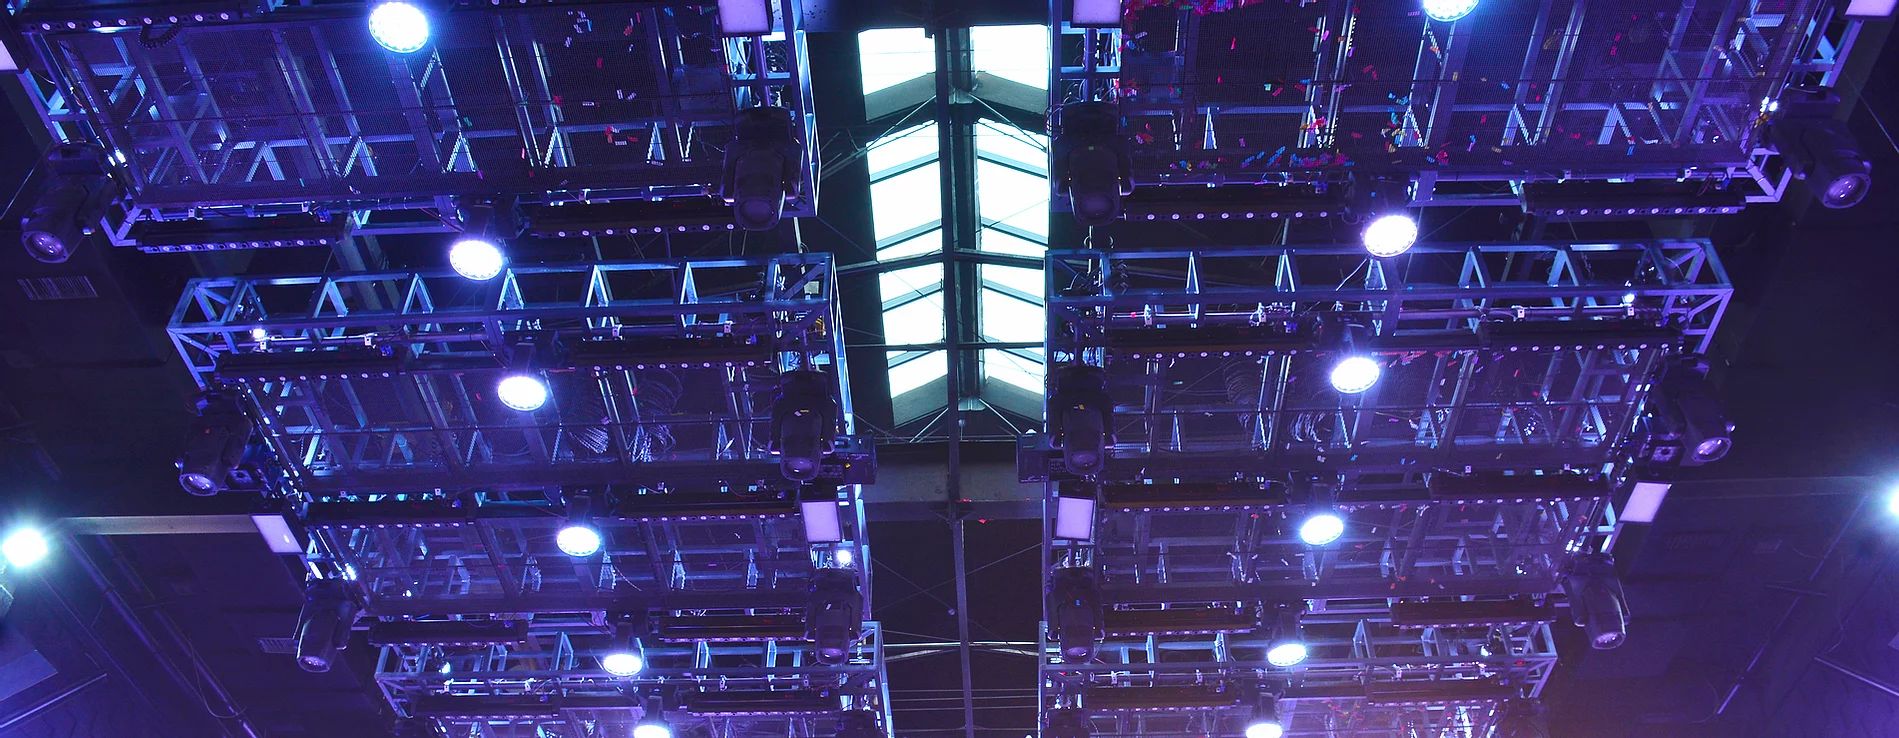 nightclub lighting truss frame (1)